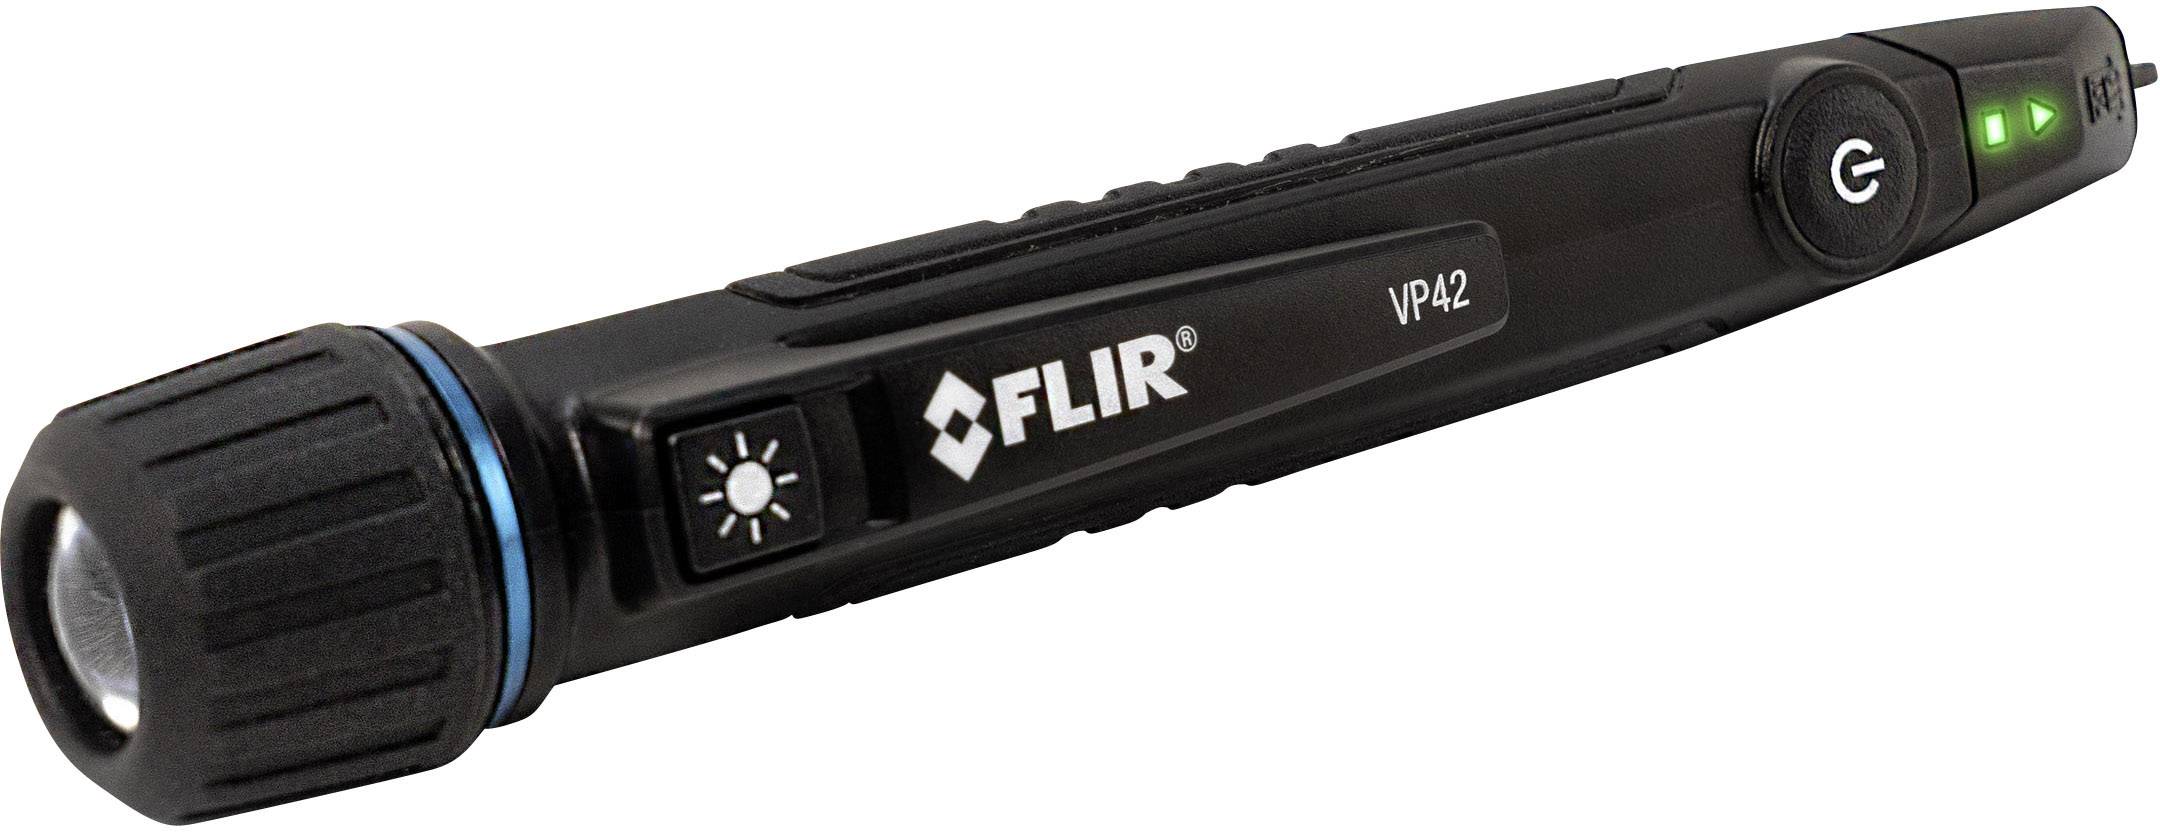 FLIR VP42 Berührungsloser Spannungsprüfer CAT IV 1000 V LCD